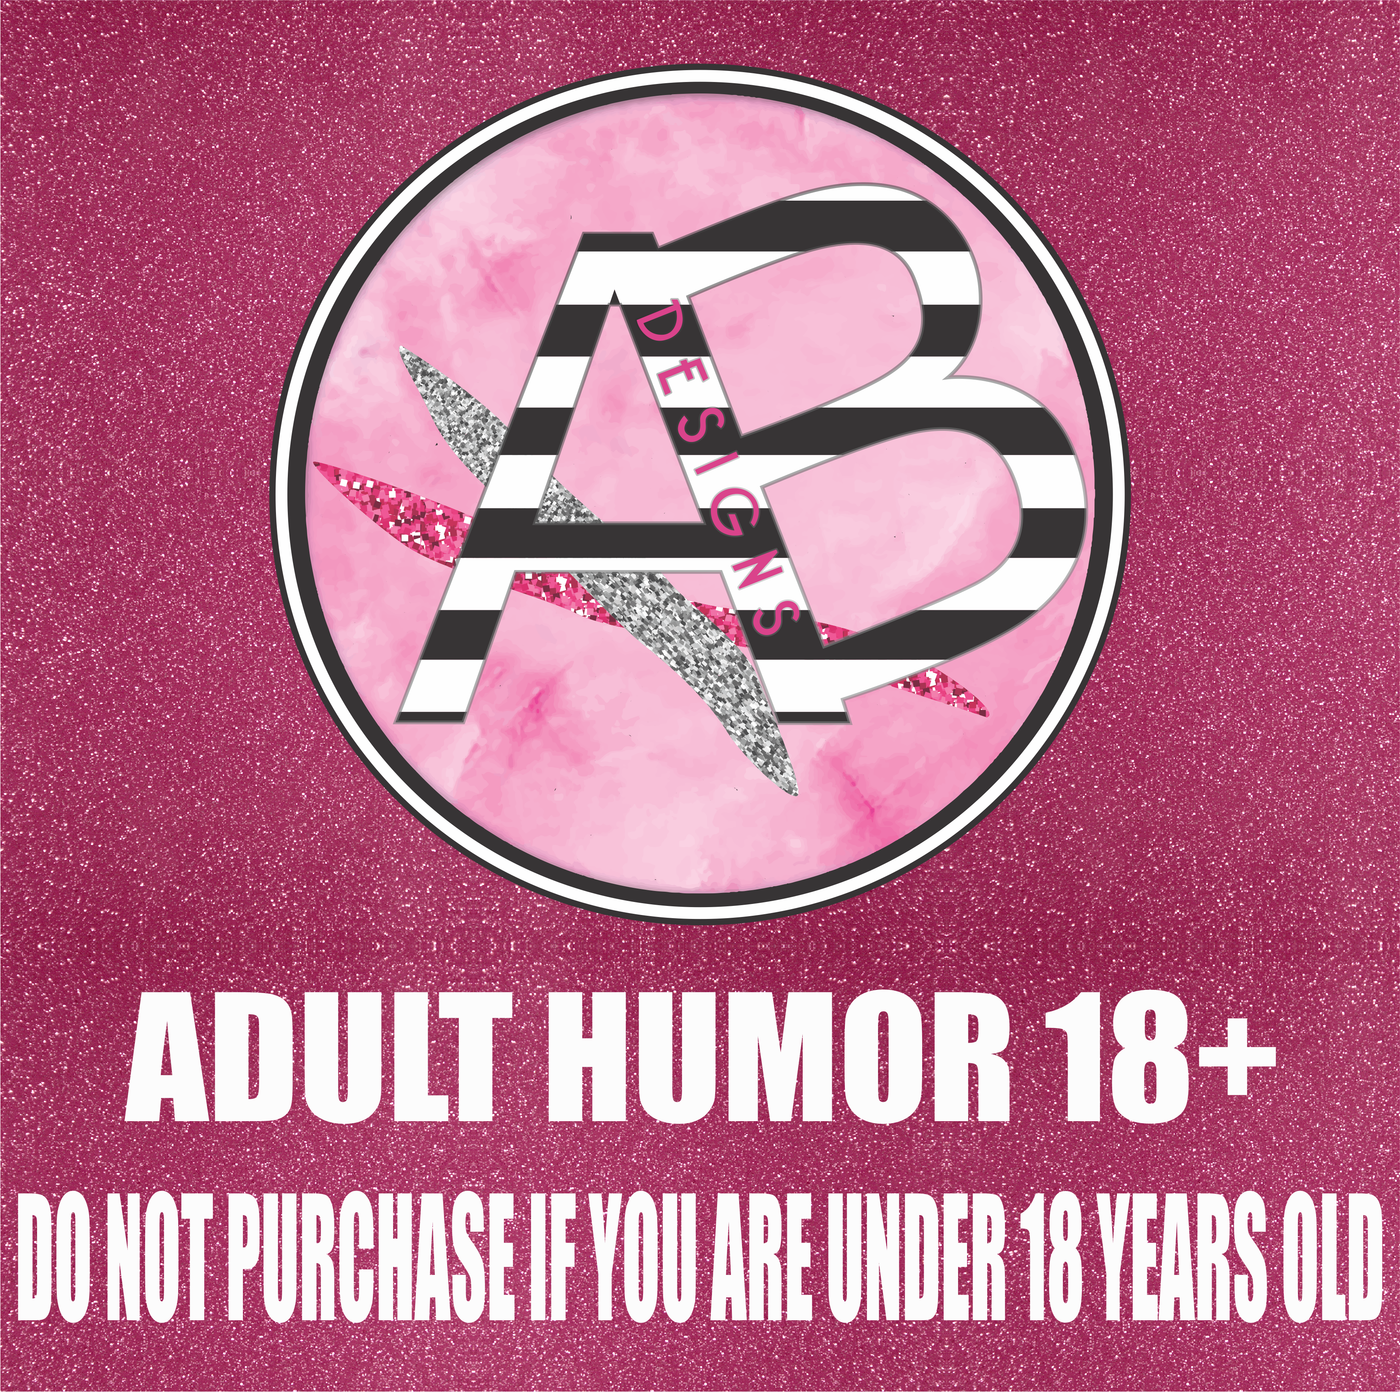 Adhesive Patterned Vinyl - Adult Humor 41 Smaller